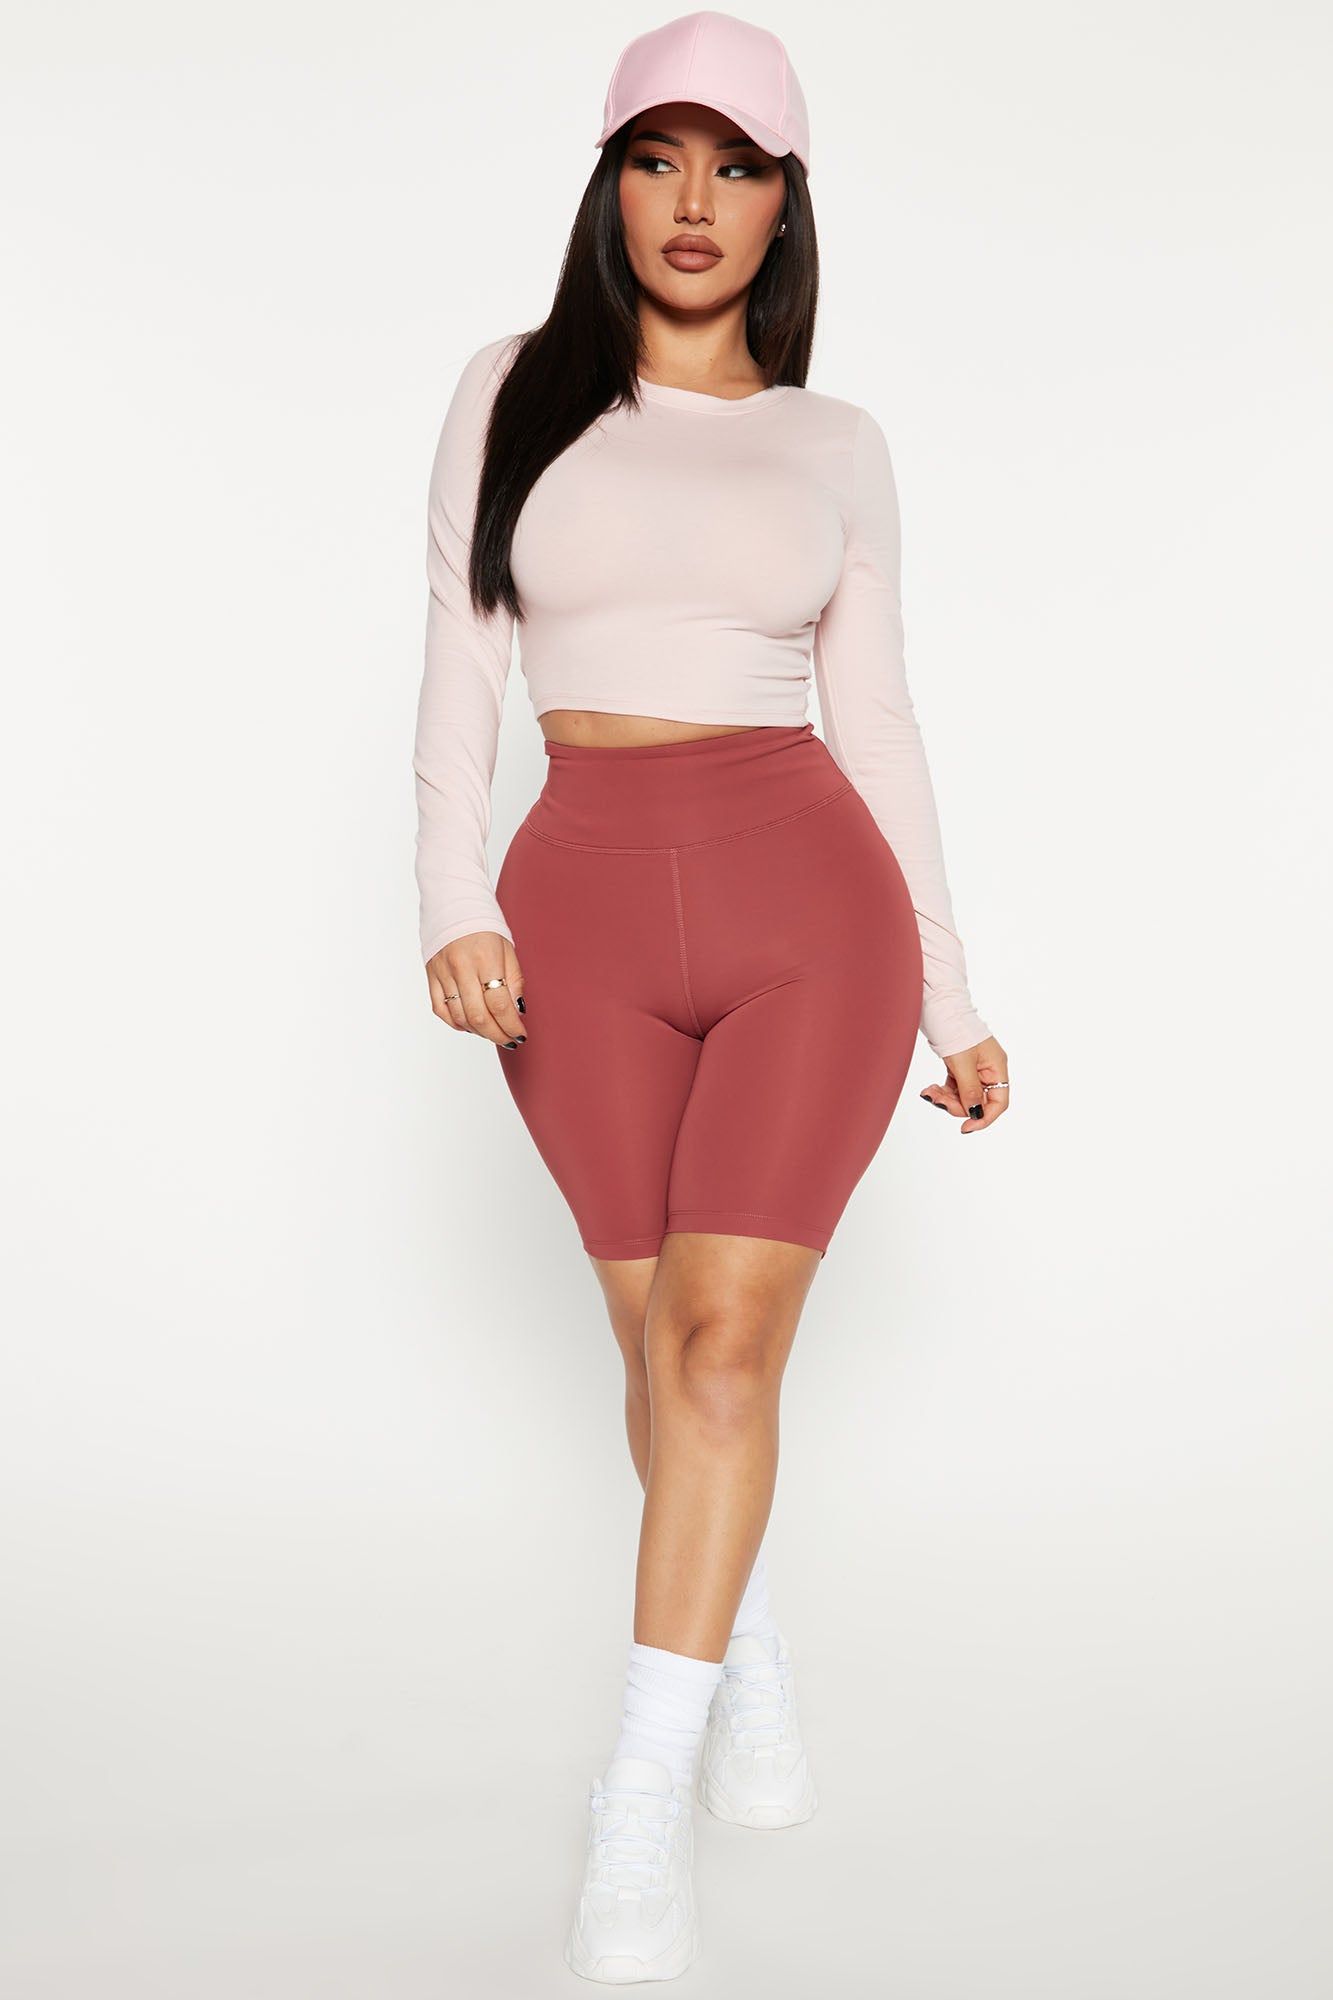 Women's Robin Long Sleeve Top in Pink Size XL by Fashion Nova